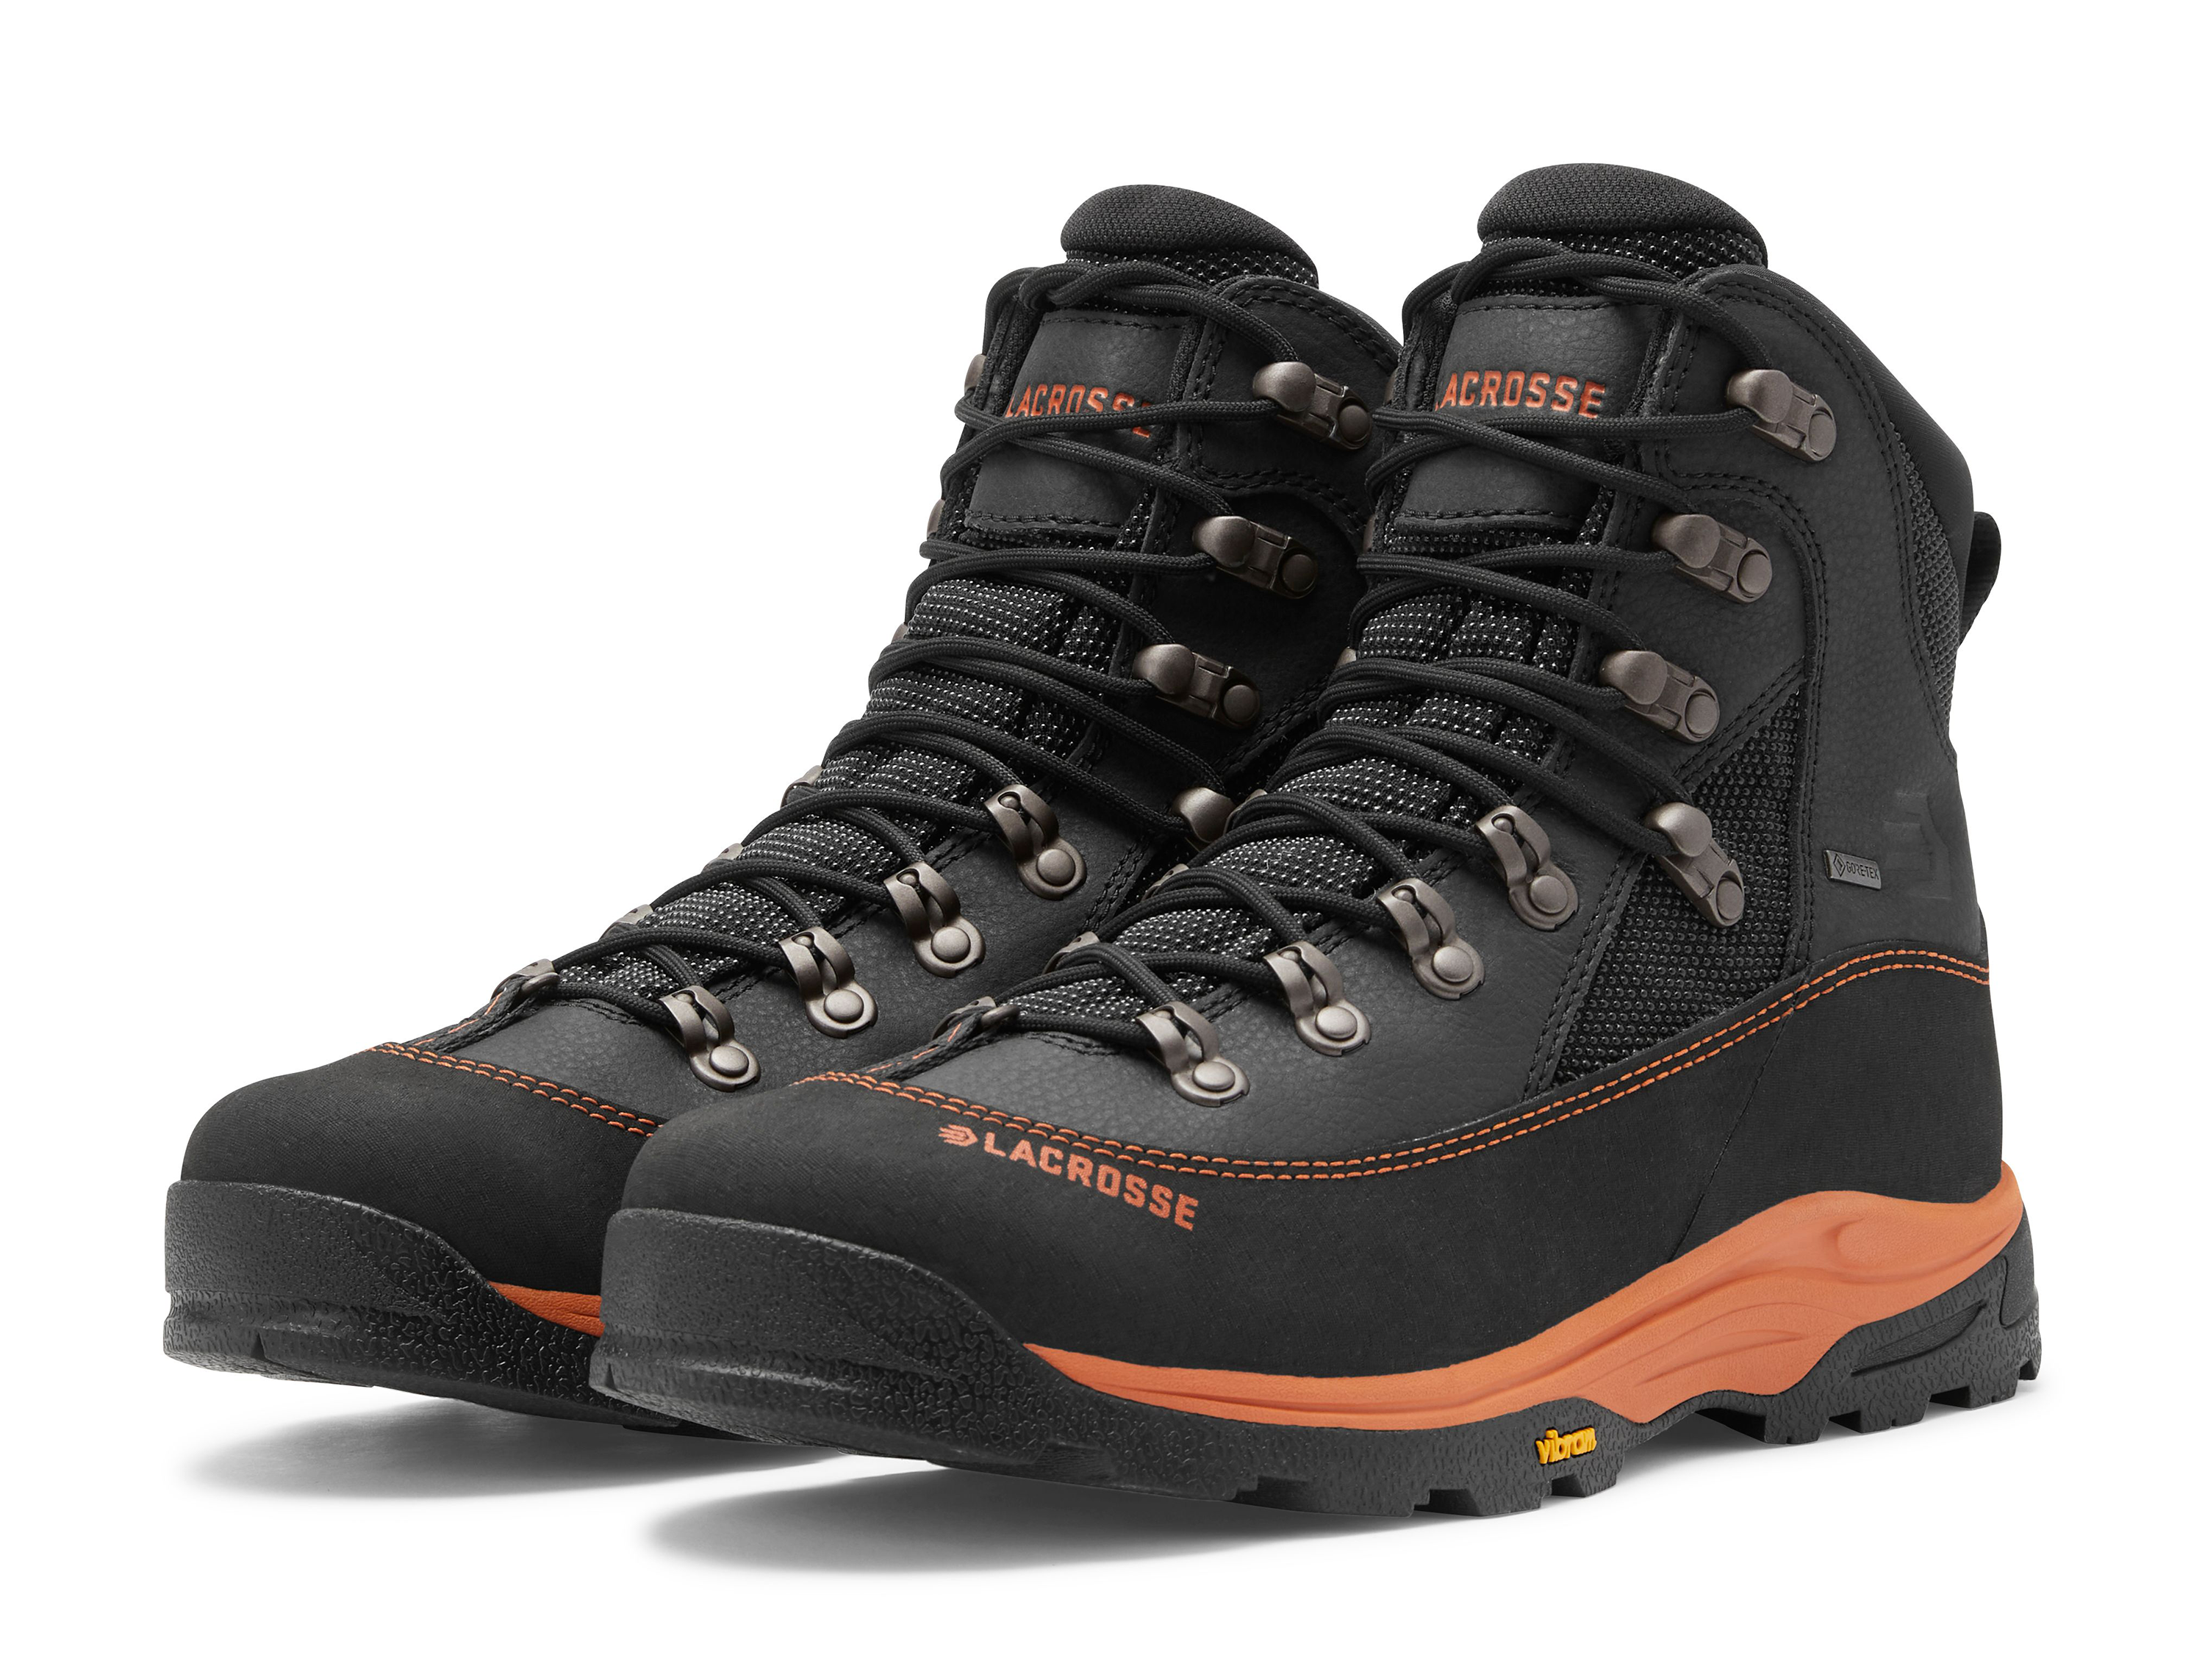 LaCrosse Ursa MS GORE-TEX Hunting Boots for Men - Gunmetal/Orange - 8W